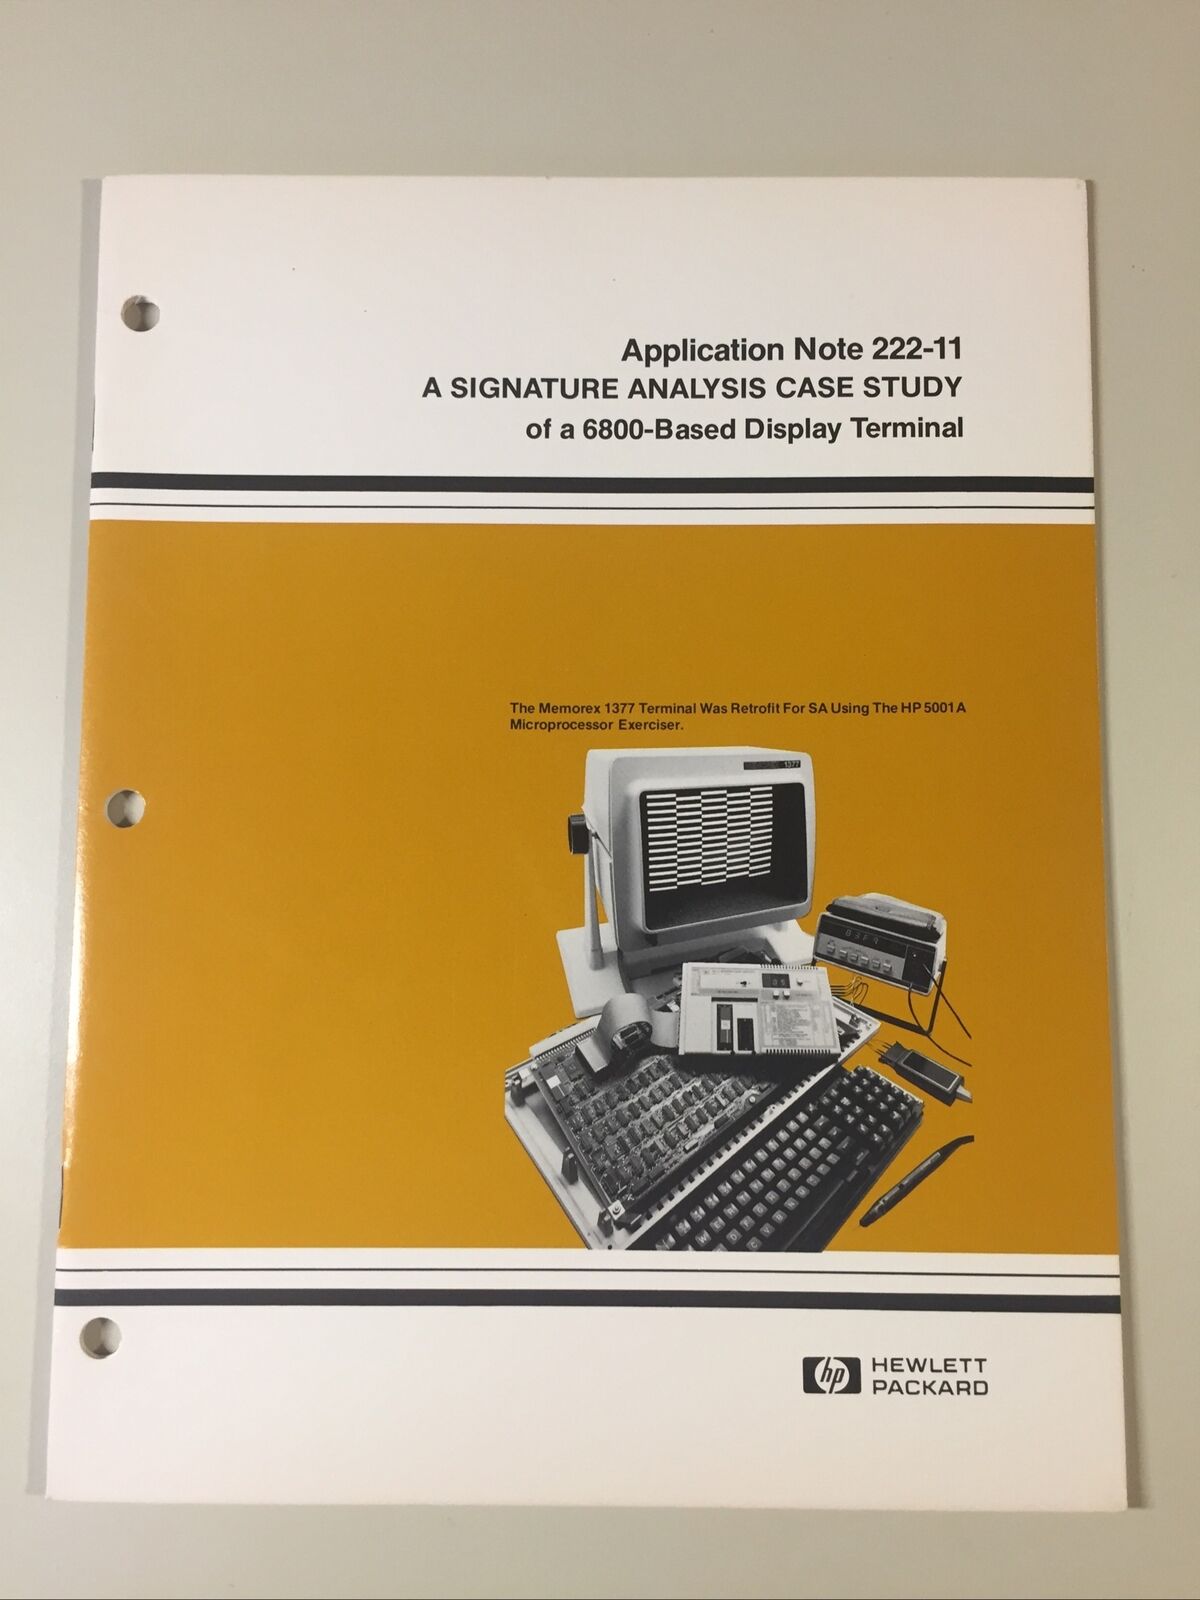 Vintage 1981 HEWLETT-PACKARD Signature Analysis Study 6800 Display Terminal